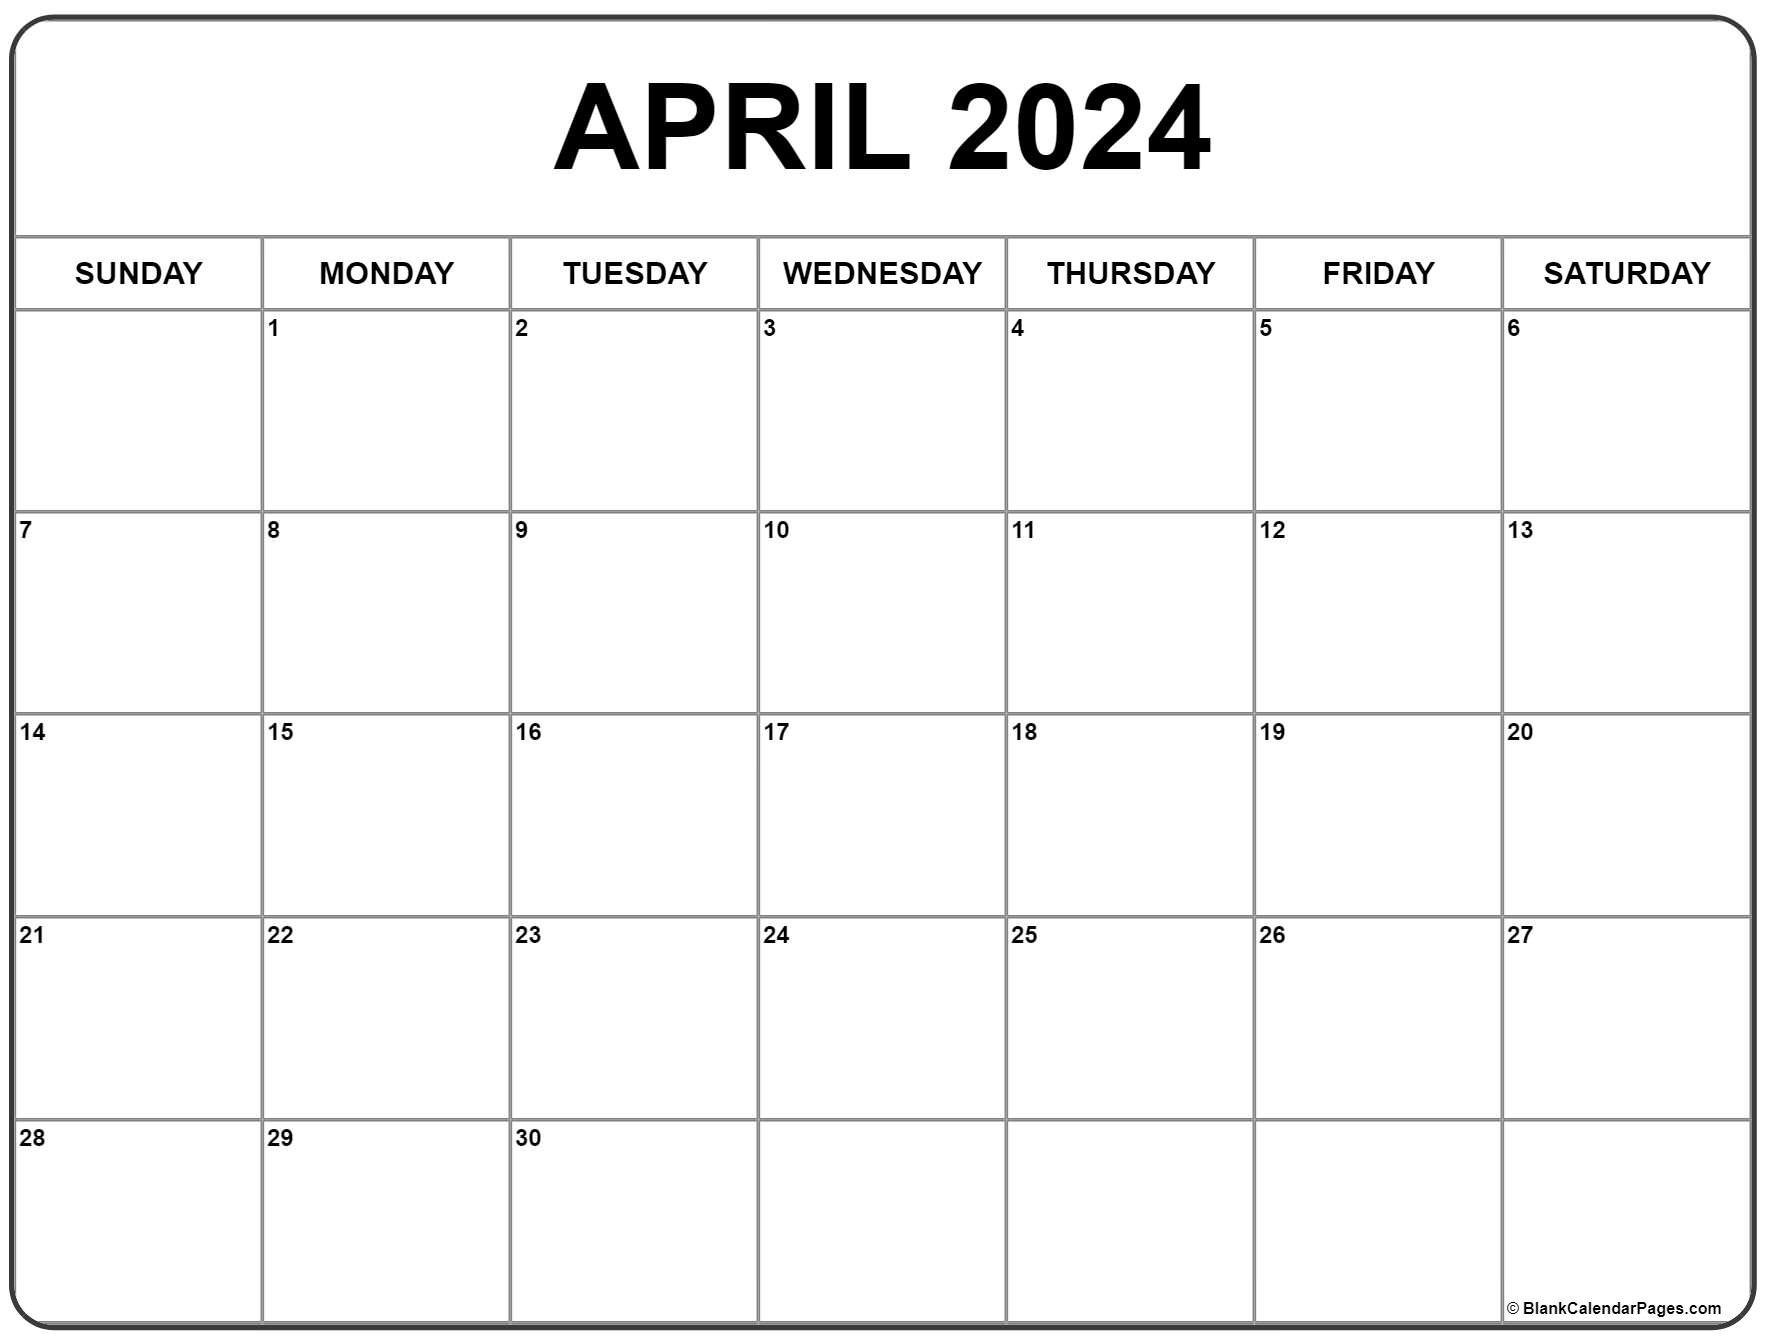 April 2024 Calendar | Free Printable Calendar for 2024 Calendar April Printable